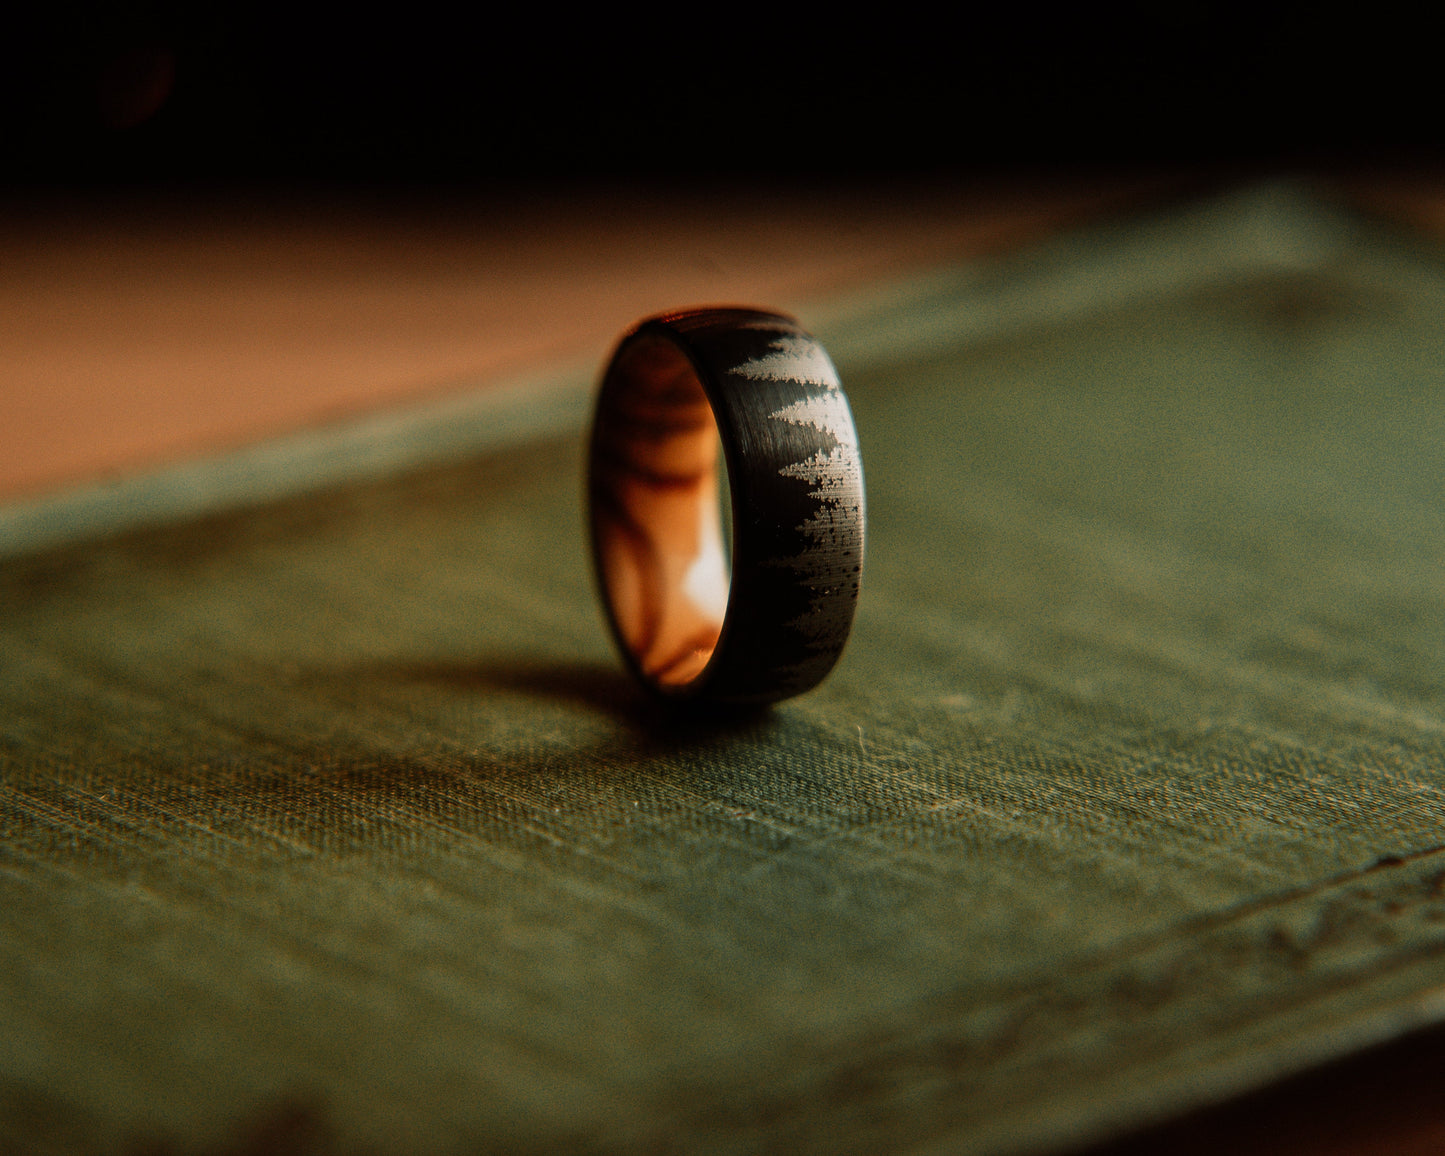 The “Adventurer” Ring by Vintage Gentlemen